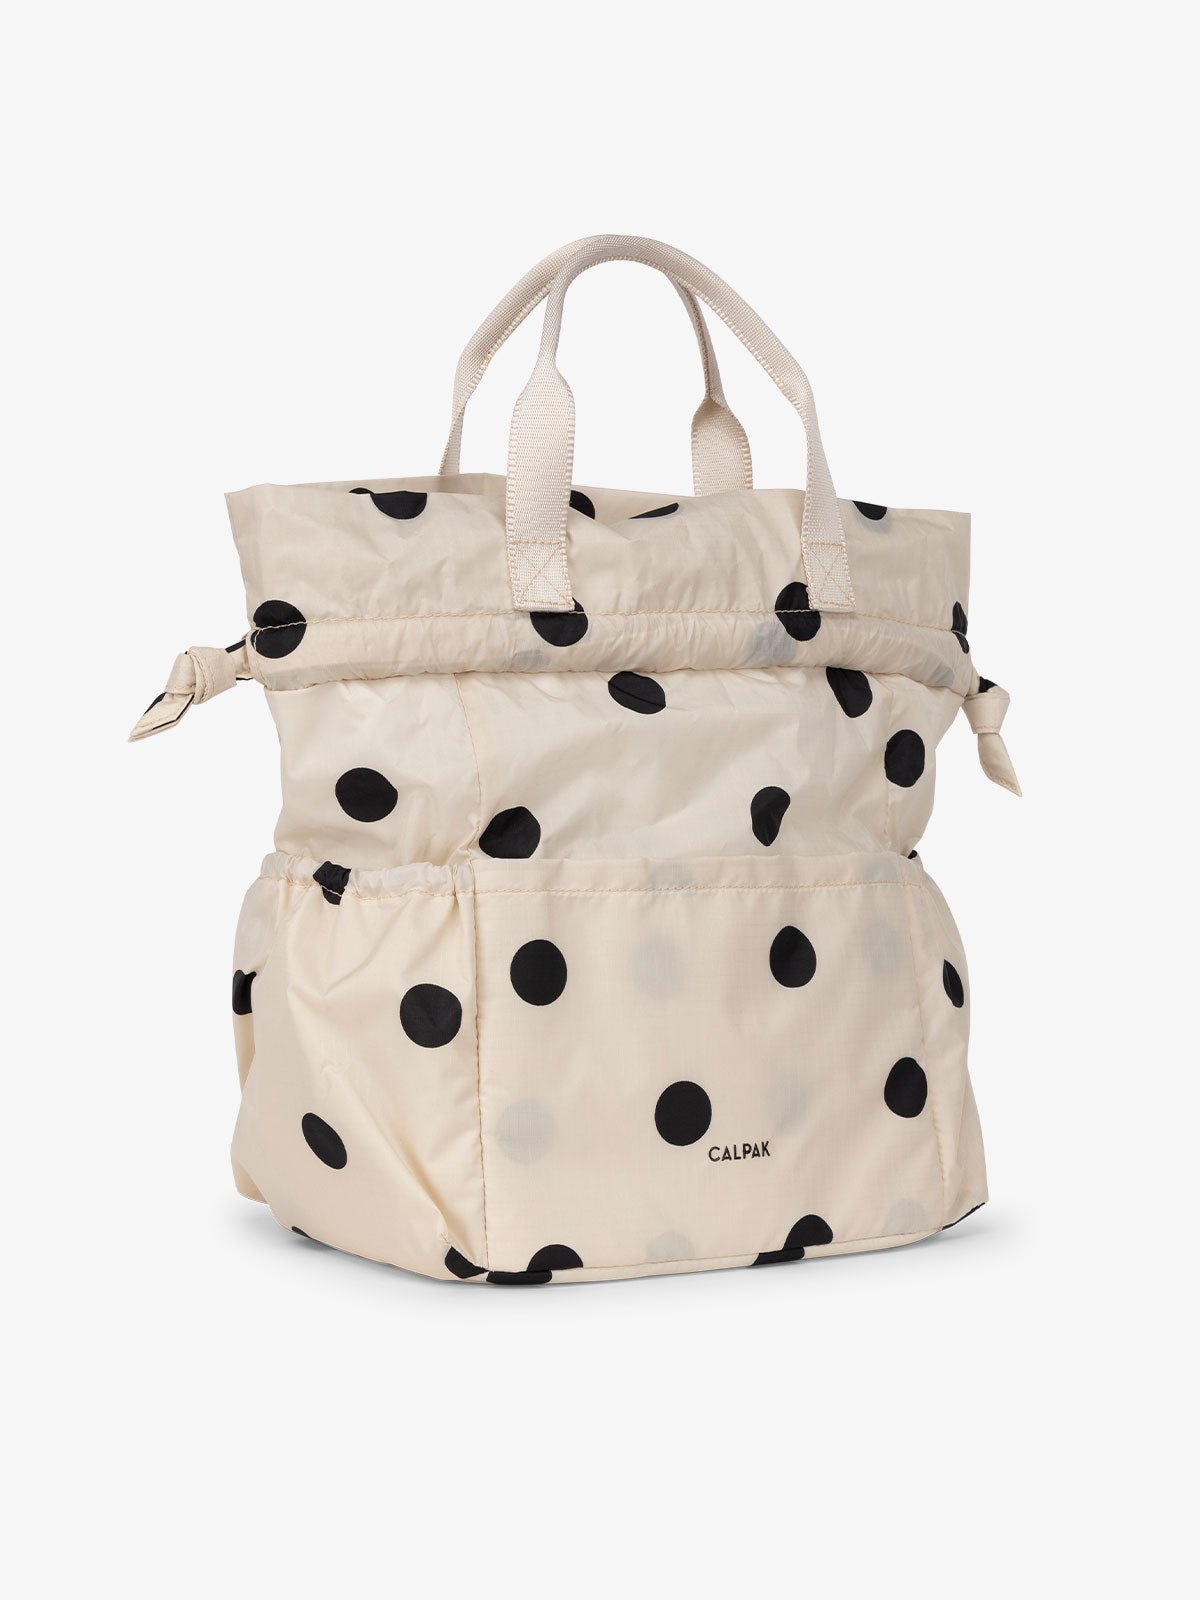 CALPAK insulated lunch bag in polka dot